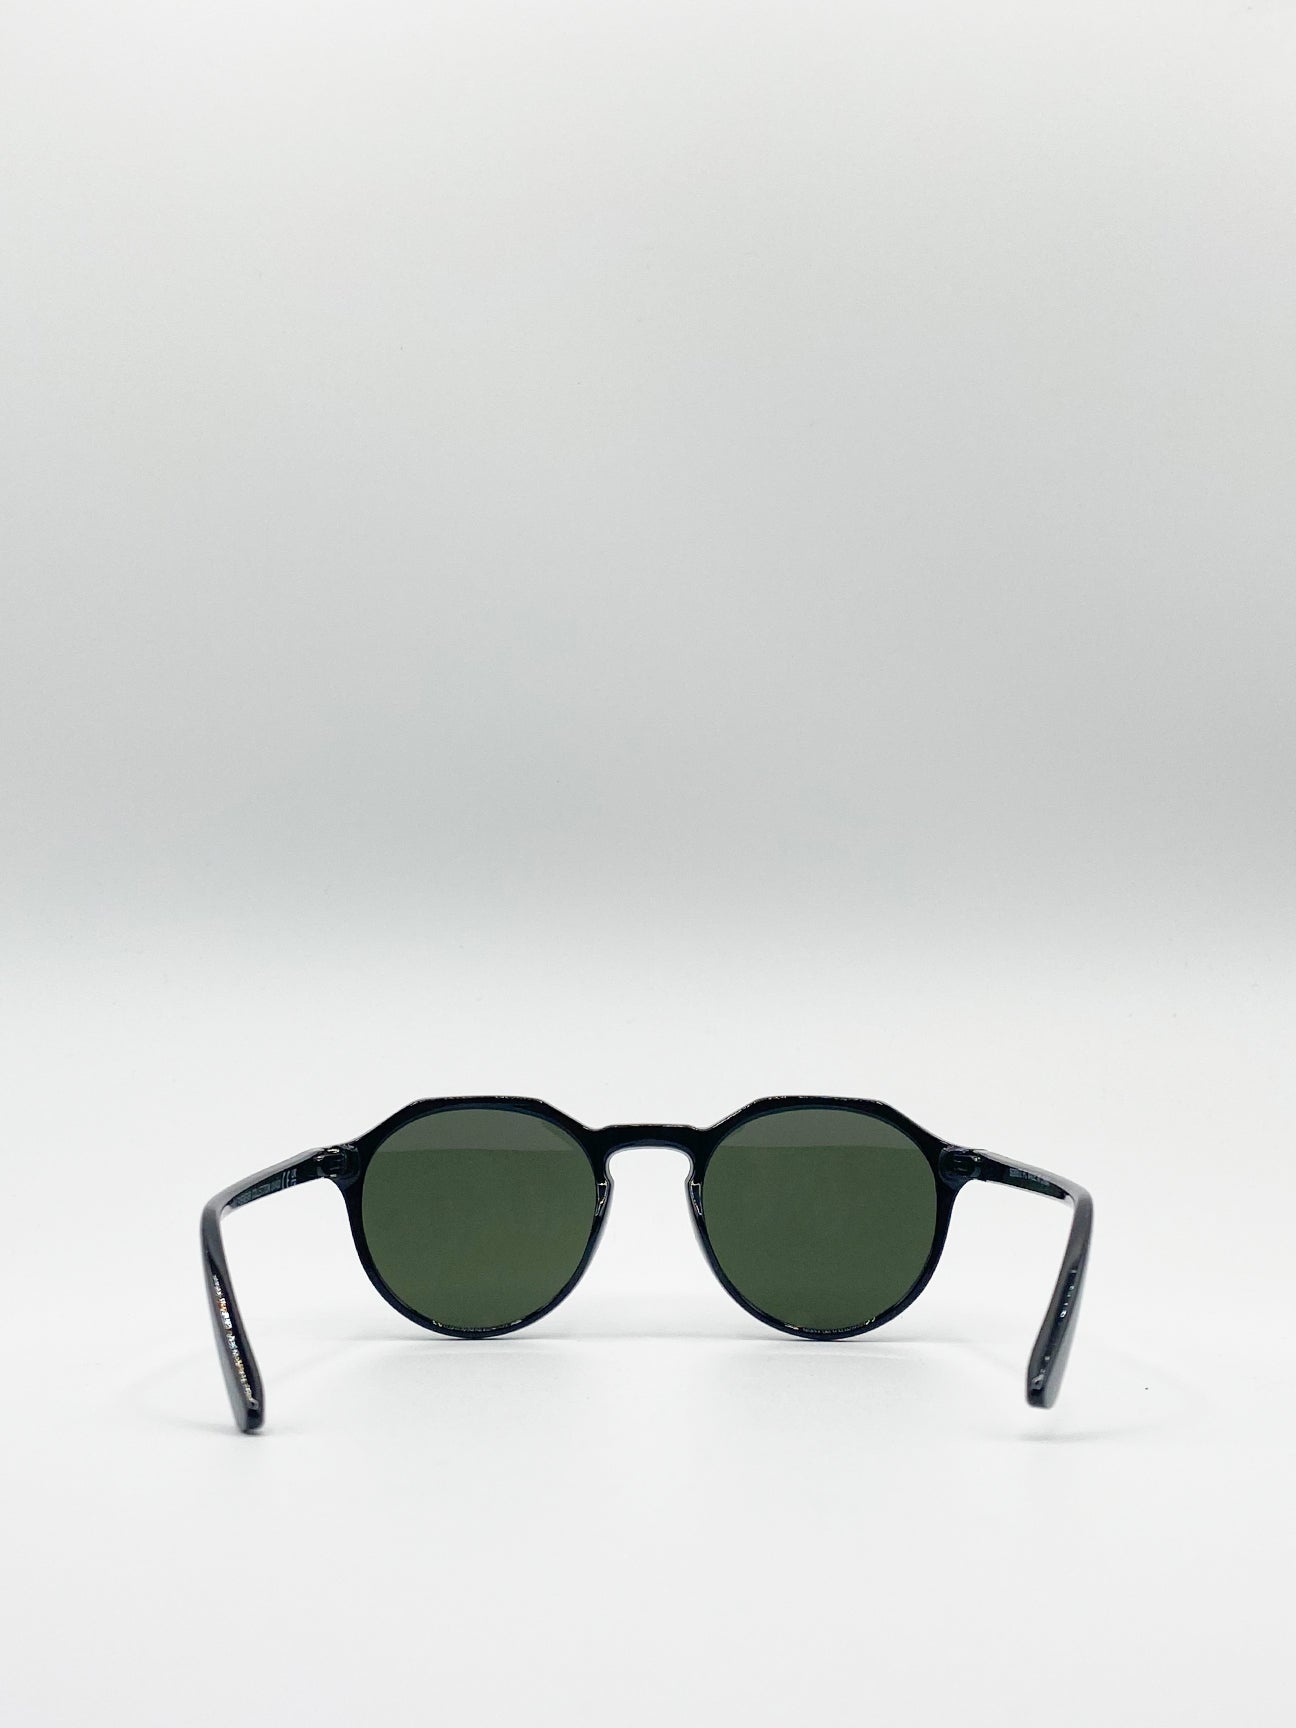 Green Mono Lense Classic Preppy Sunglasses With Key Hole Nosebridge